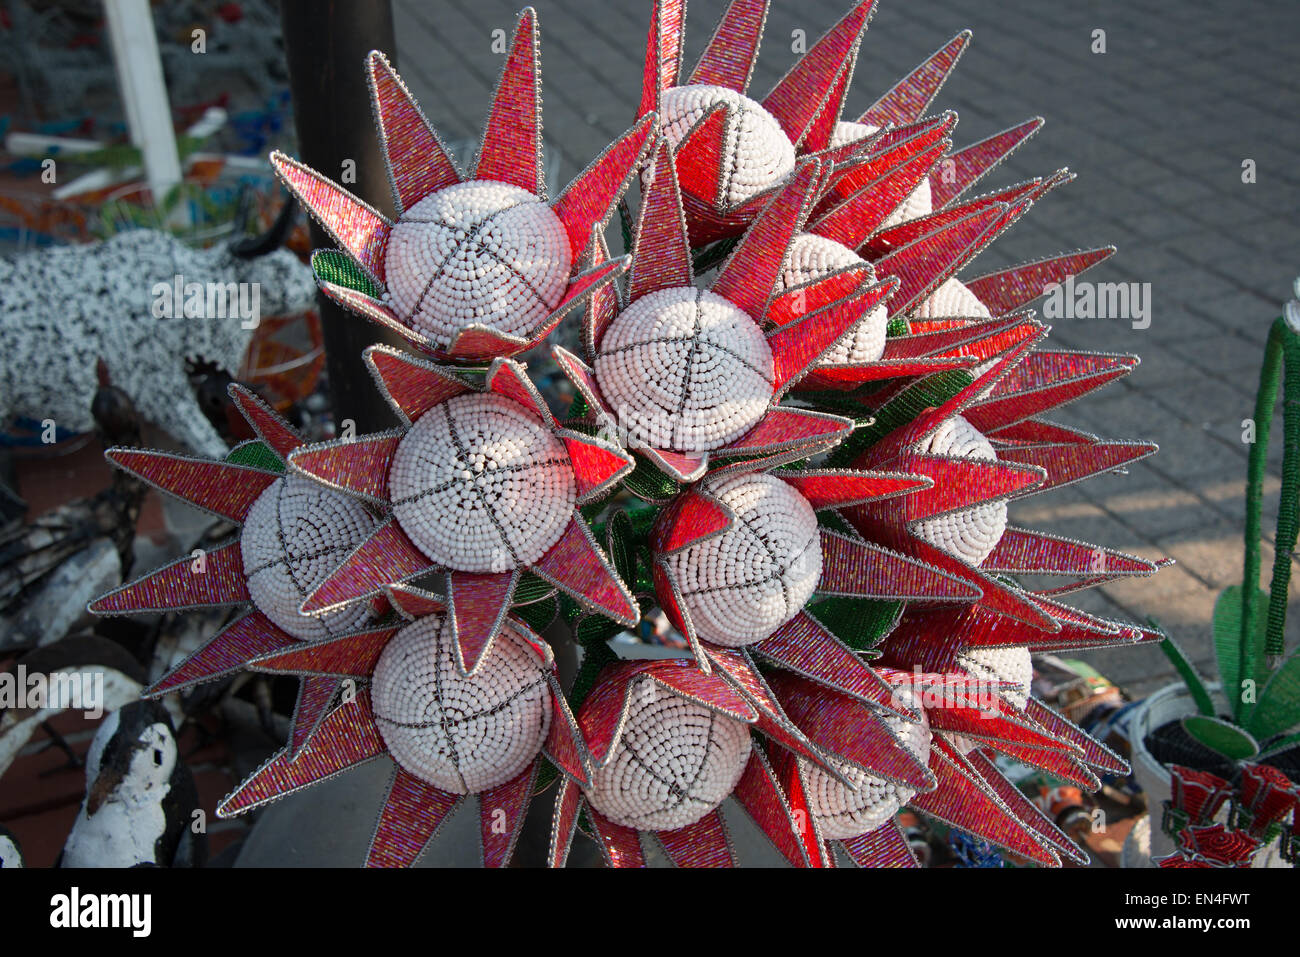 Souvenir protea flower crafts, Quayside Centre, Simon’s Town, Cape Peninsula, Western Cape Province, Republic of South Africa Stock Photo